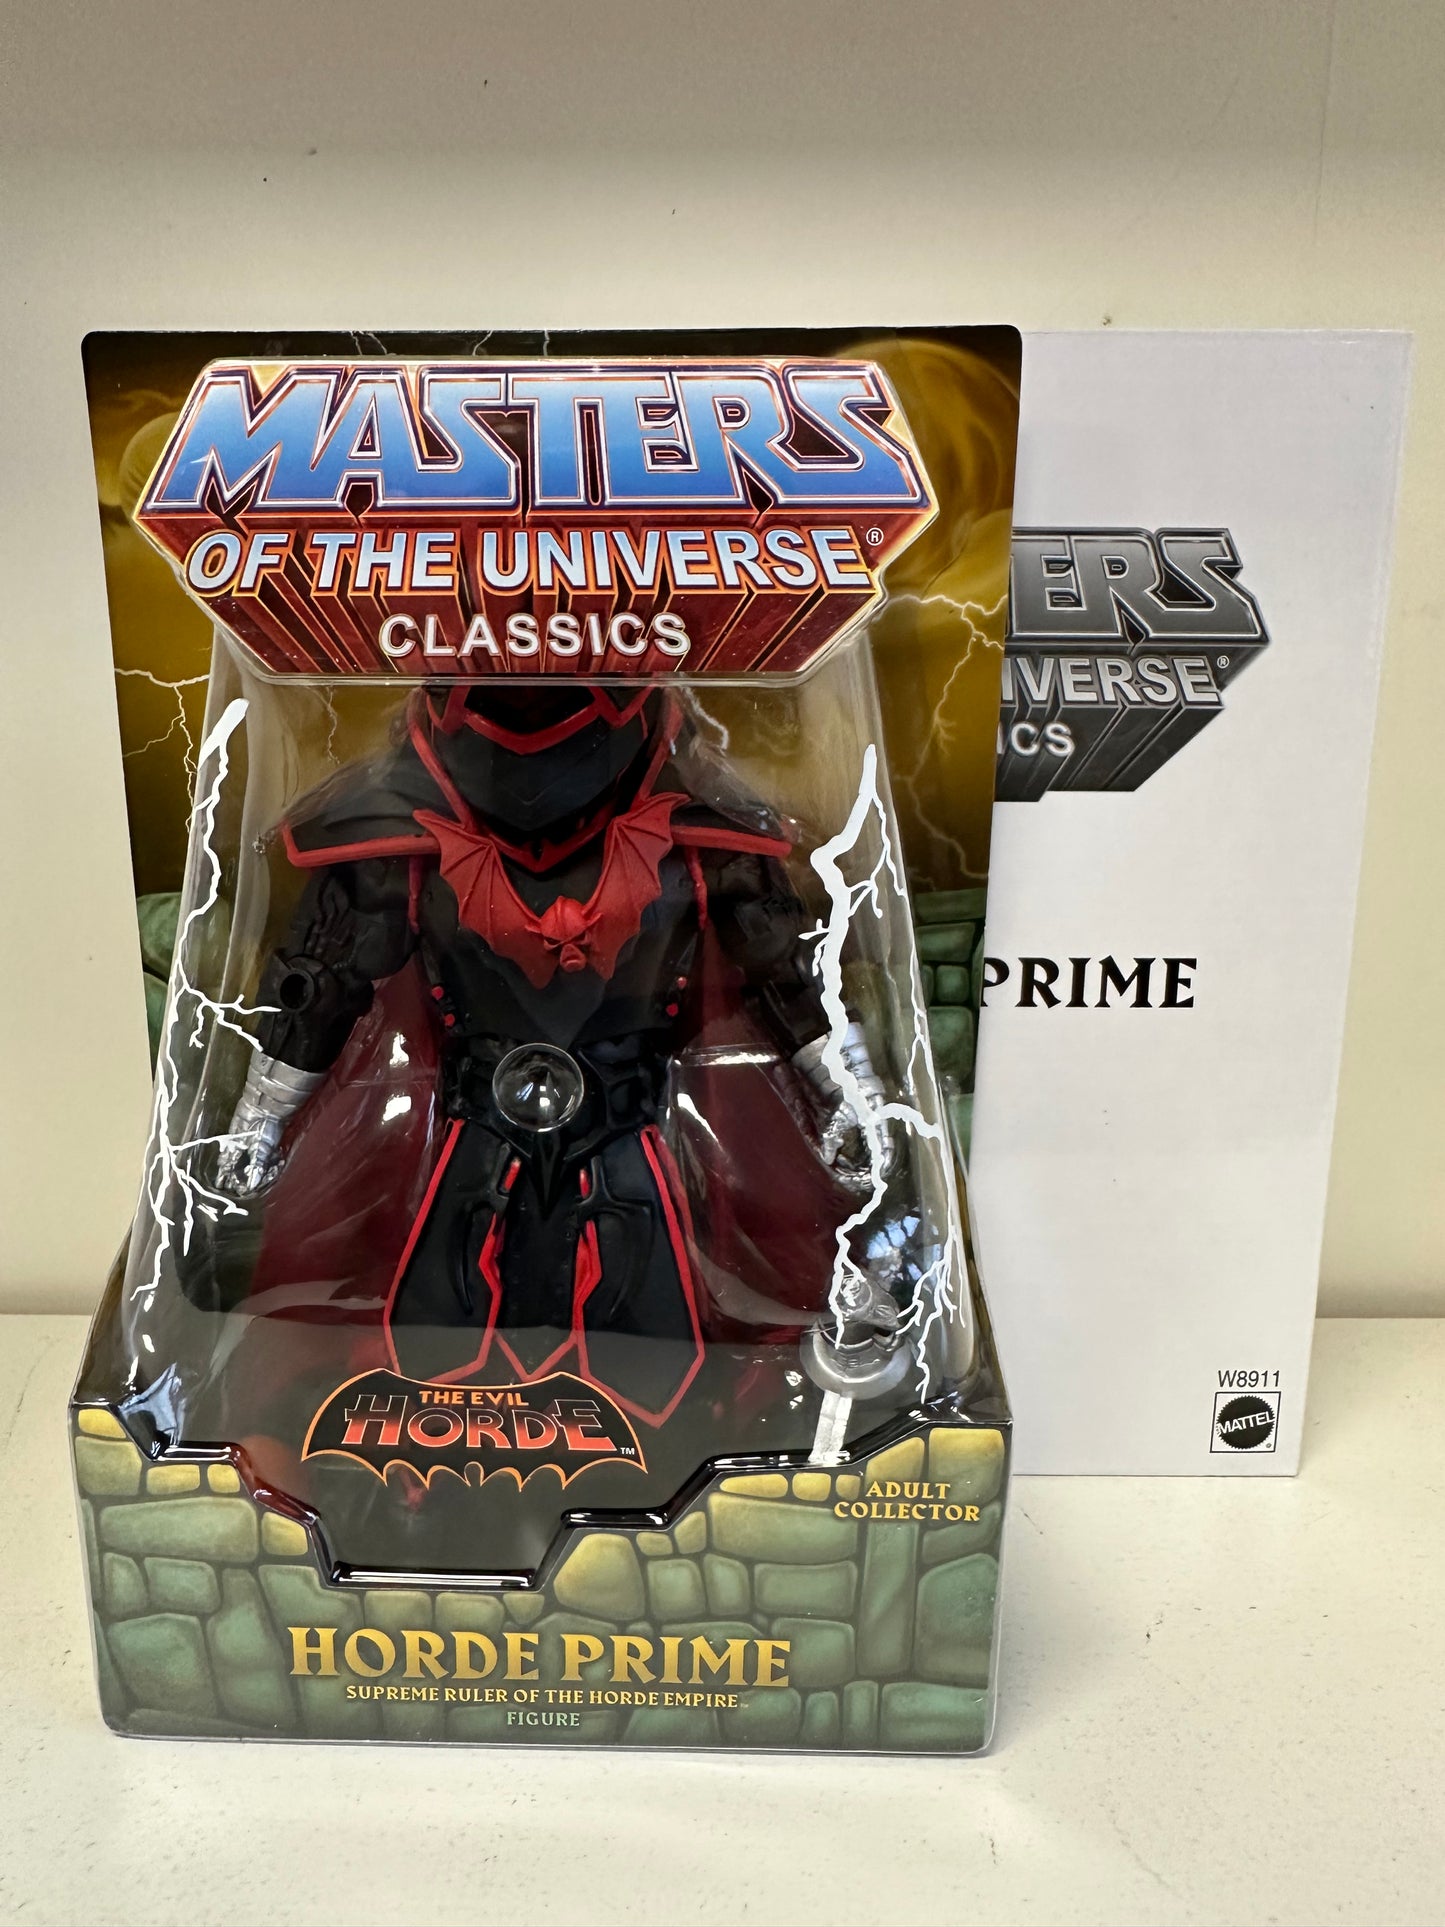 MOTUC Horde Prime He-Man Master’s of the Universe Classics Action Figure